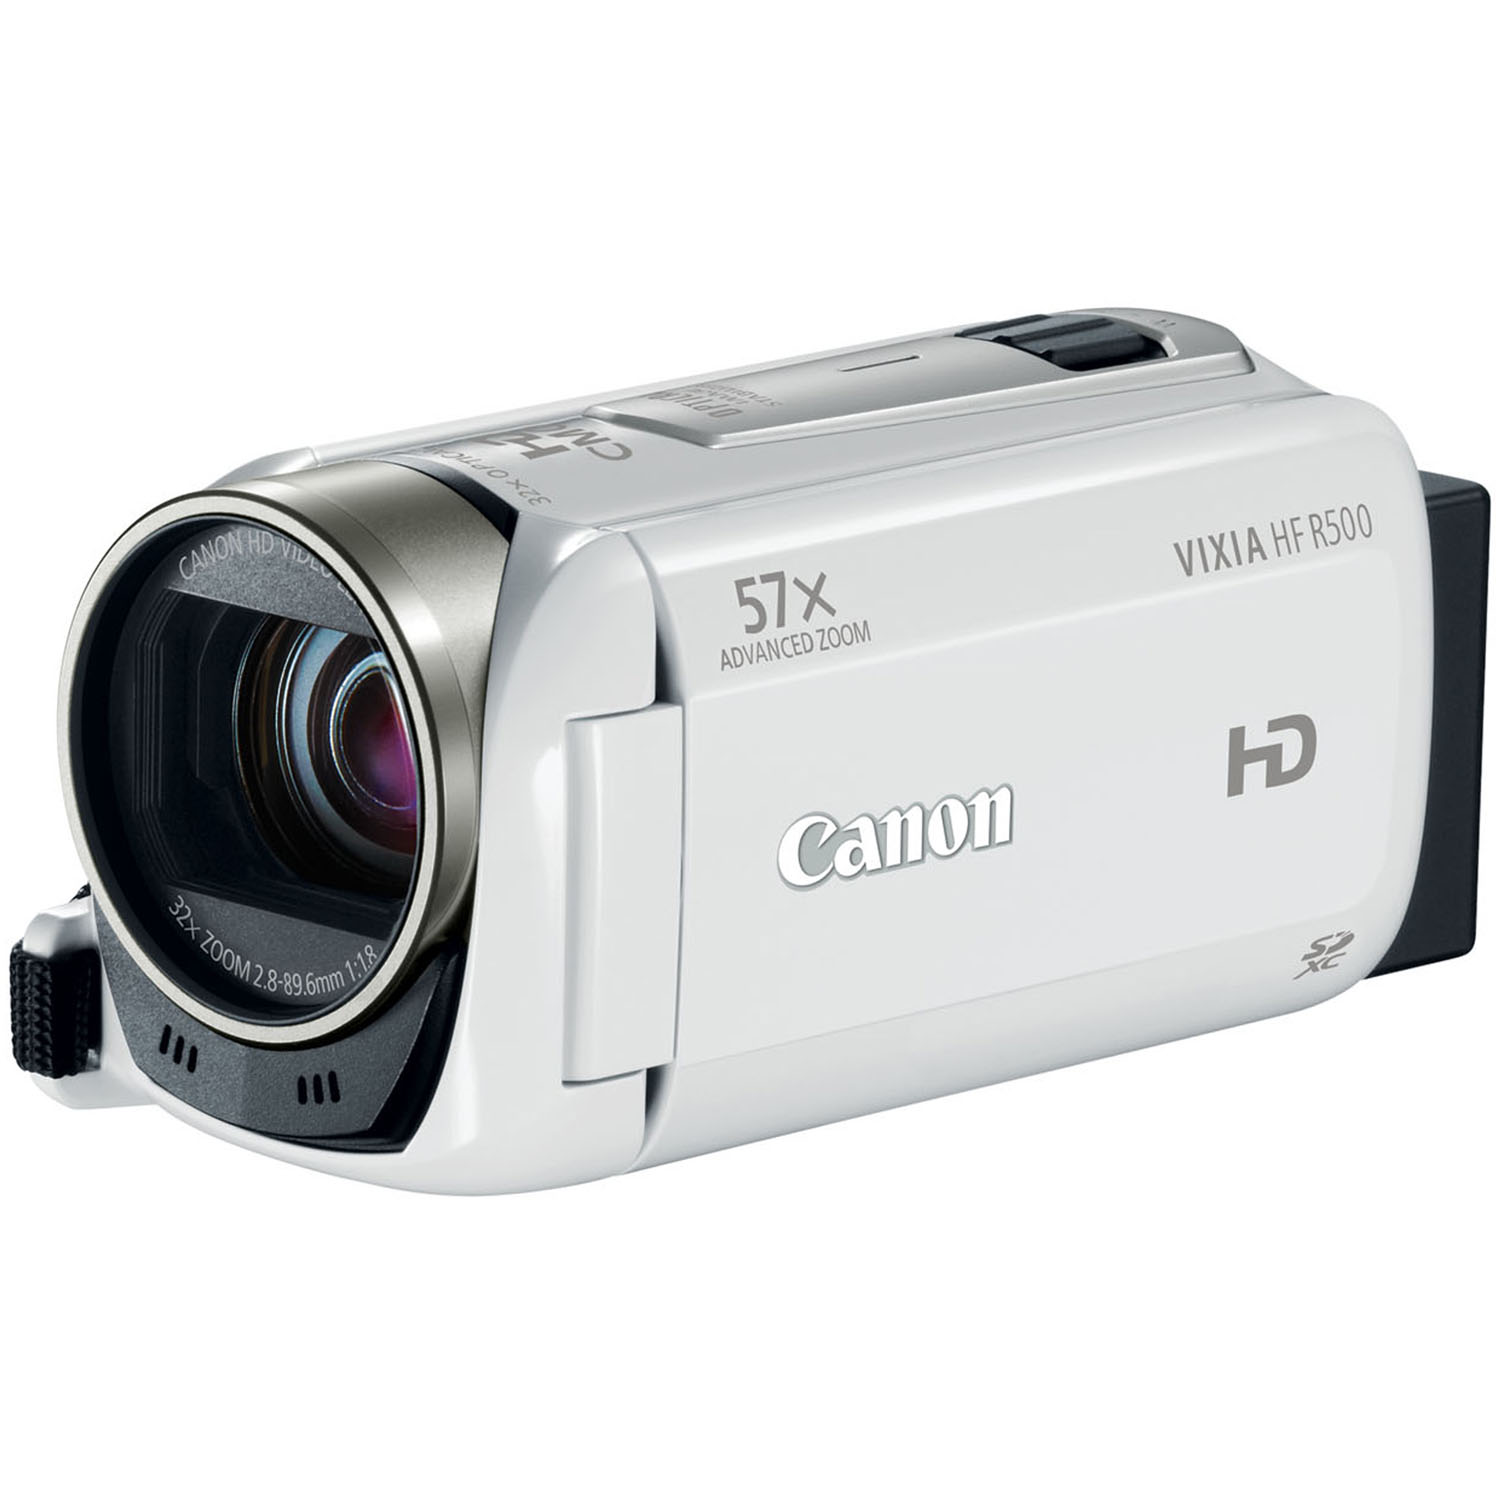 VIXIA HF R500 White HD Camcorder with 57x Advanced Zoom